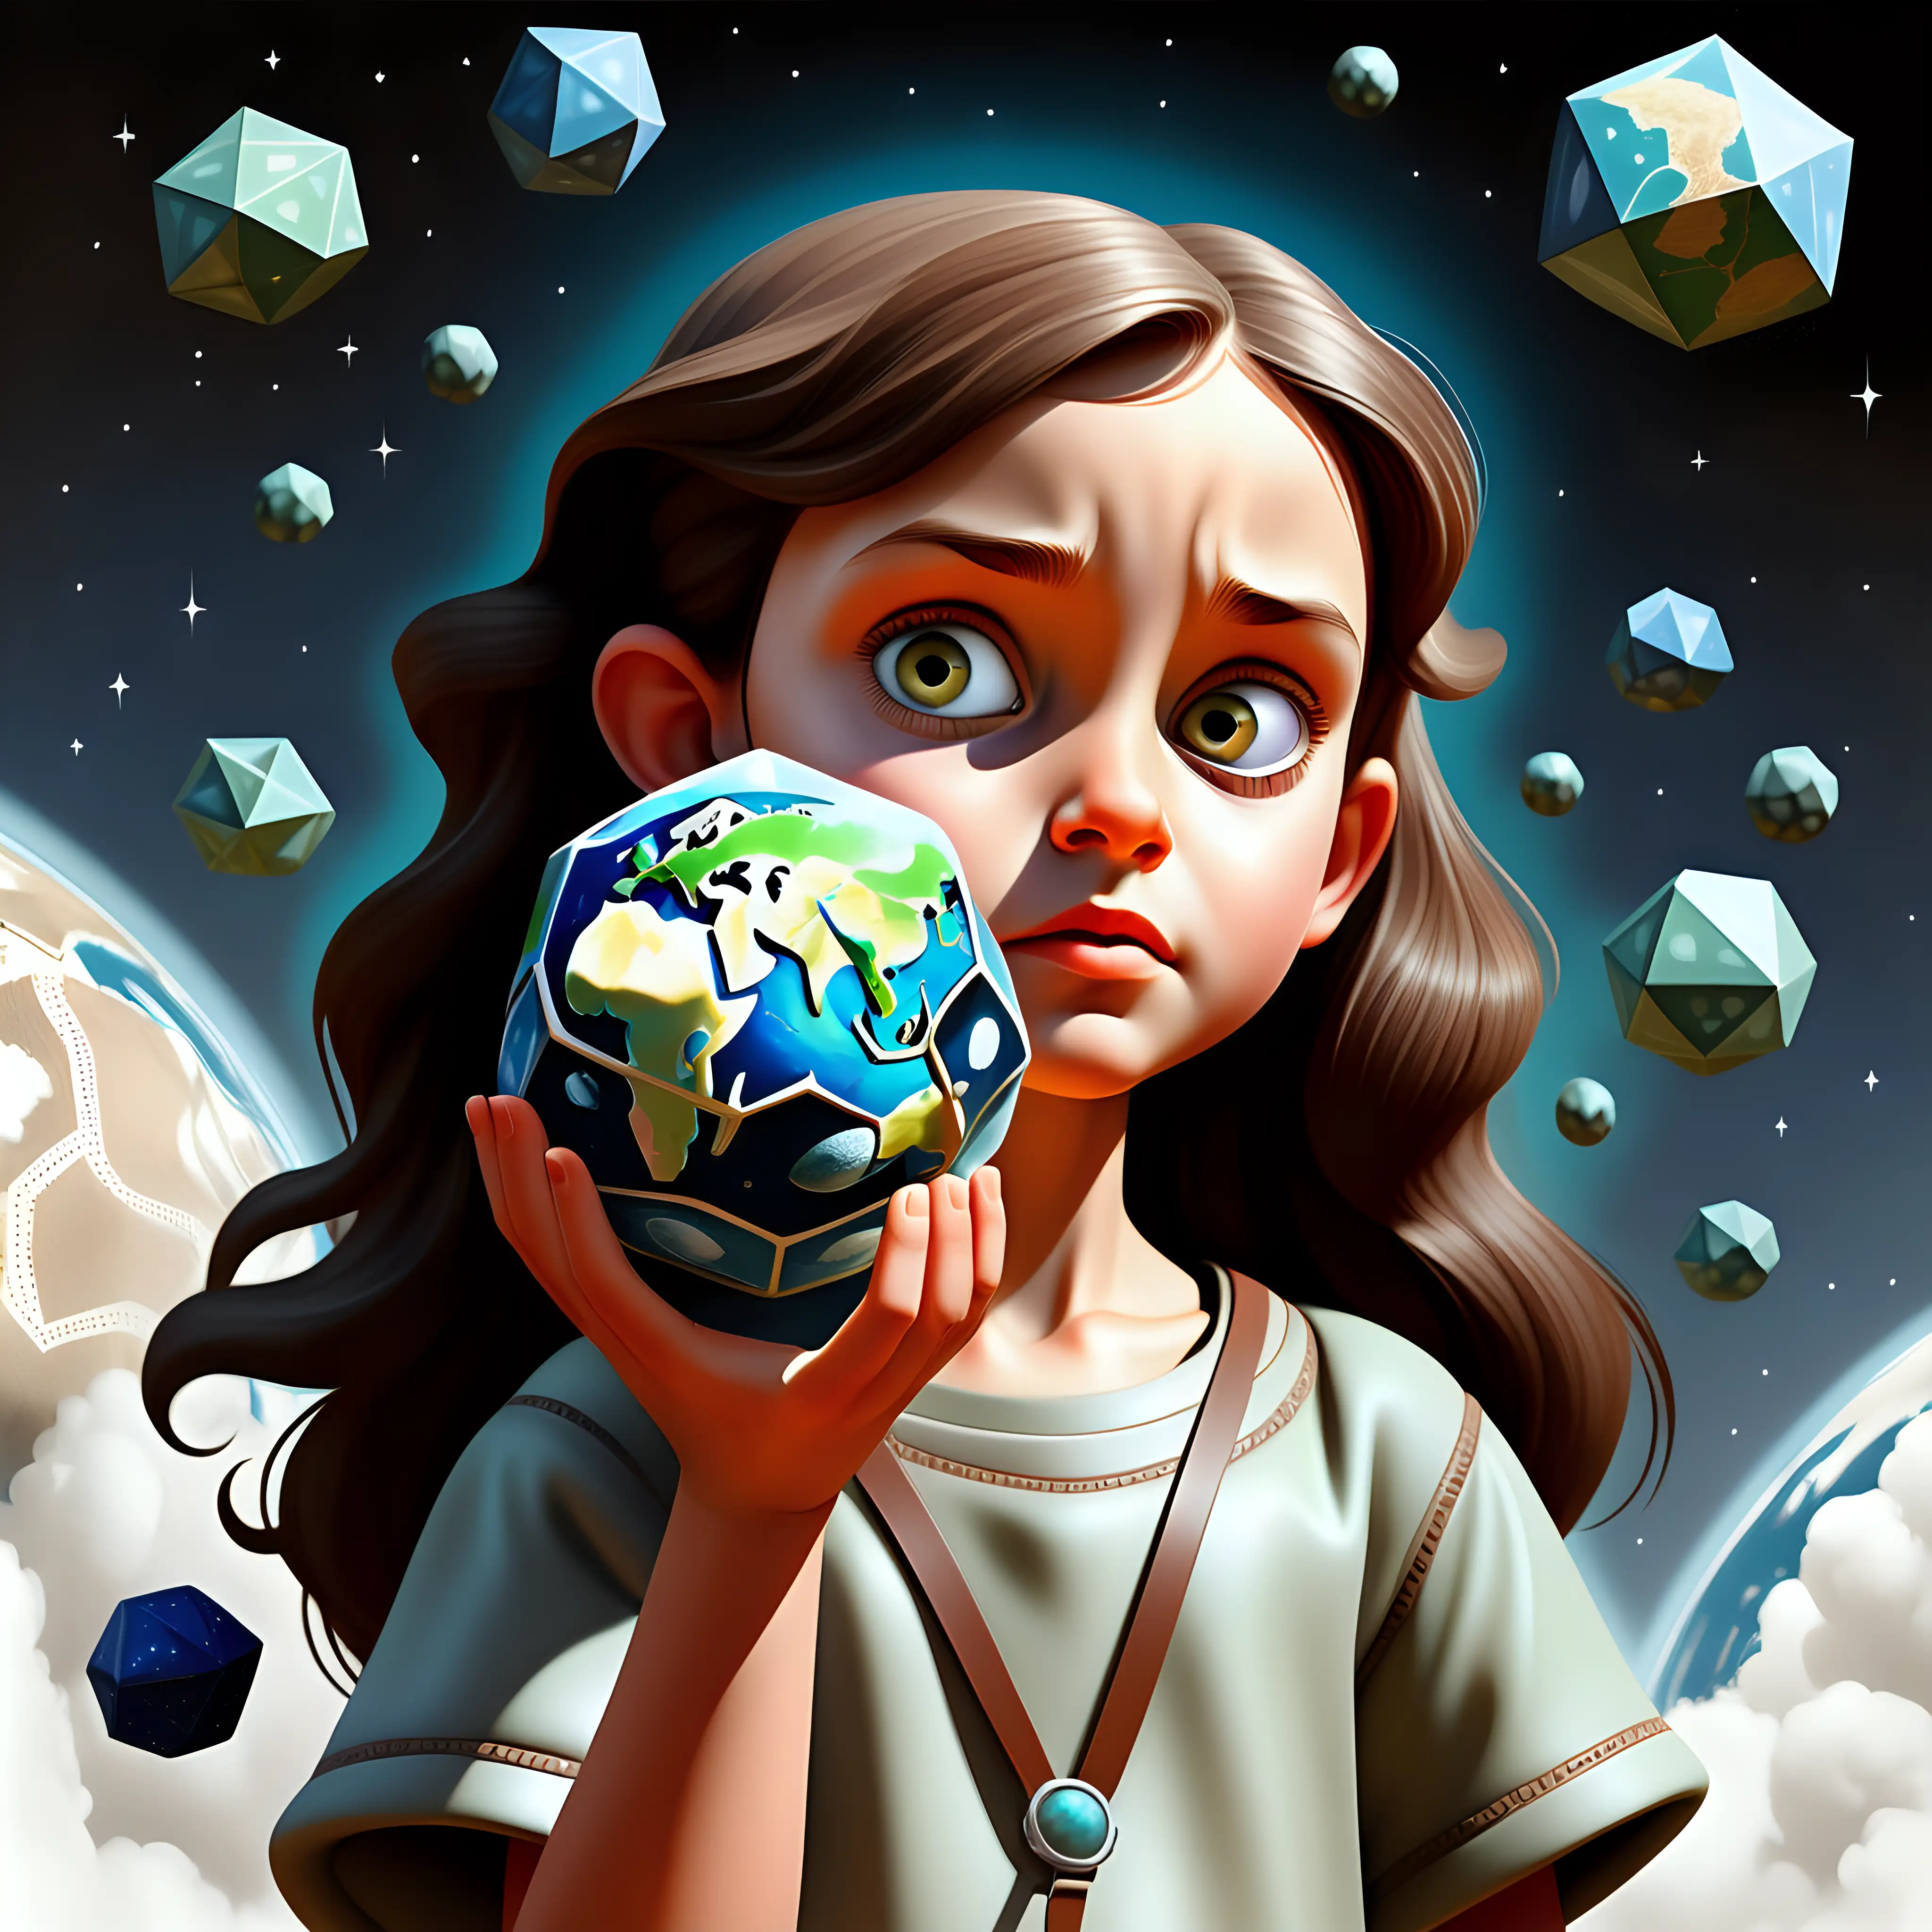 Enchanting Joslyn Arwen ReedLookalike 10YearOld Girl Admiring Dodecahedral Earth